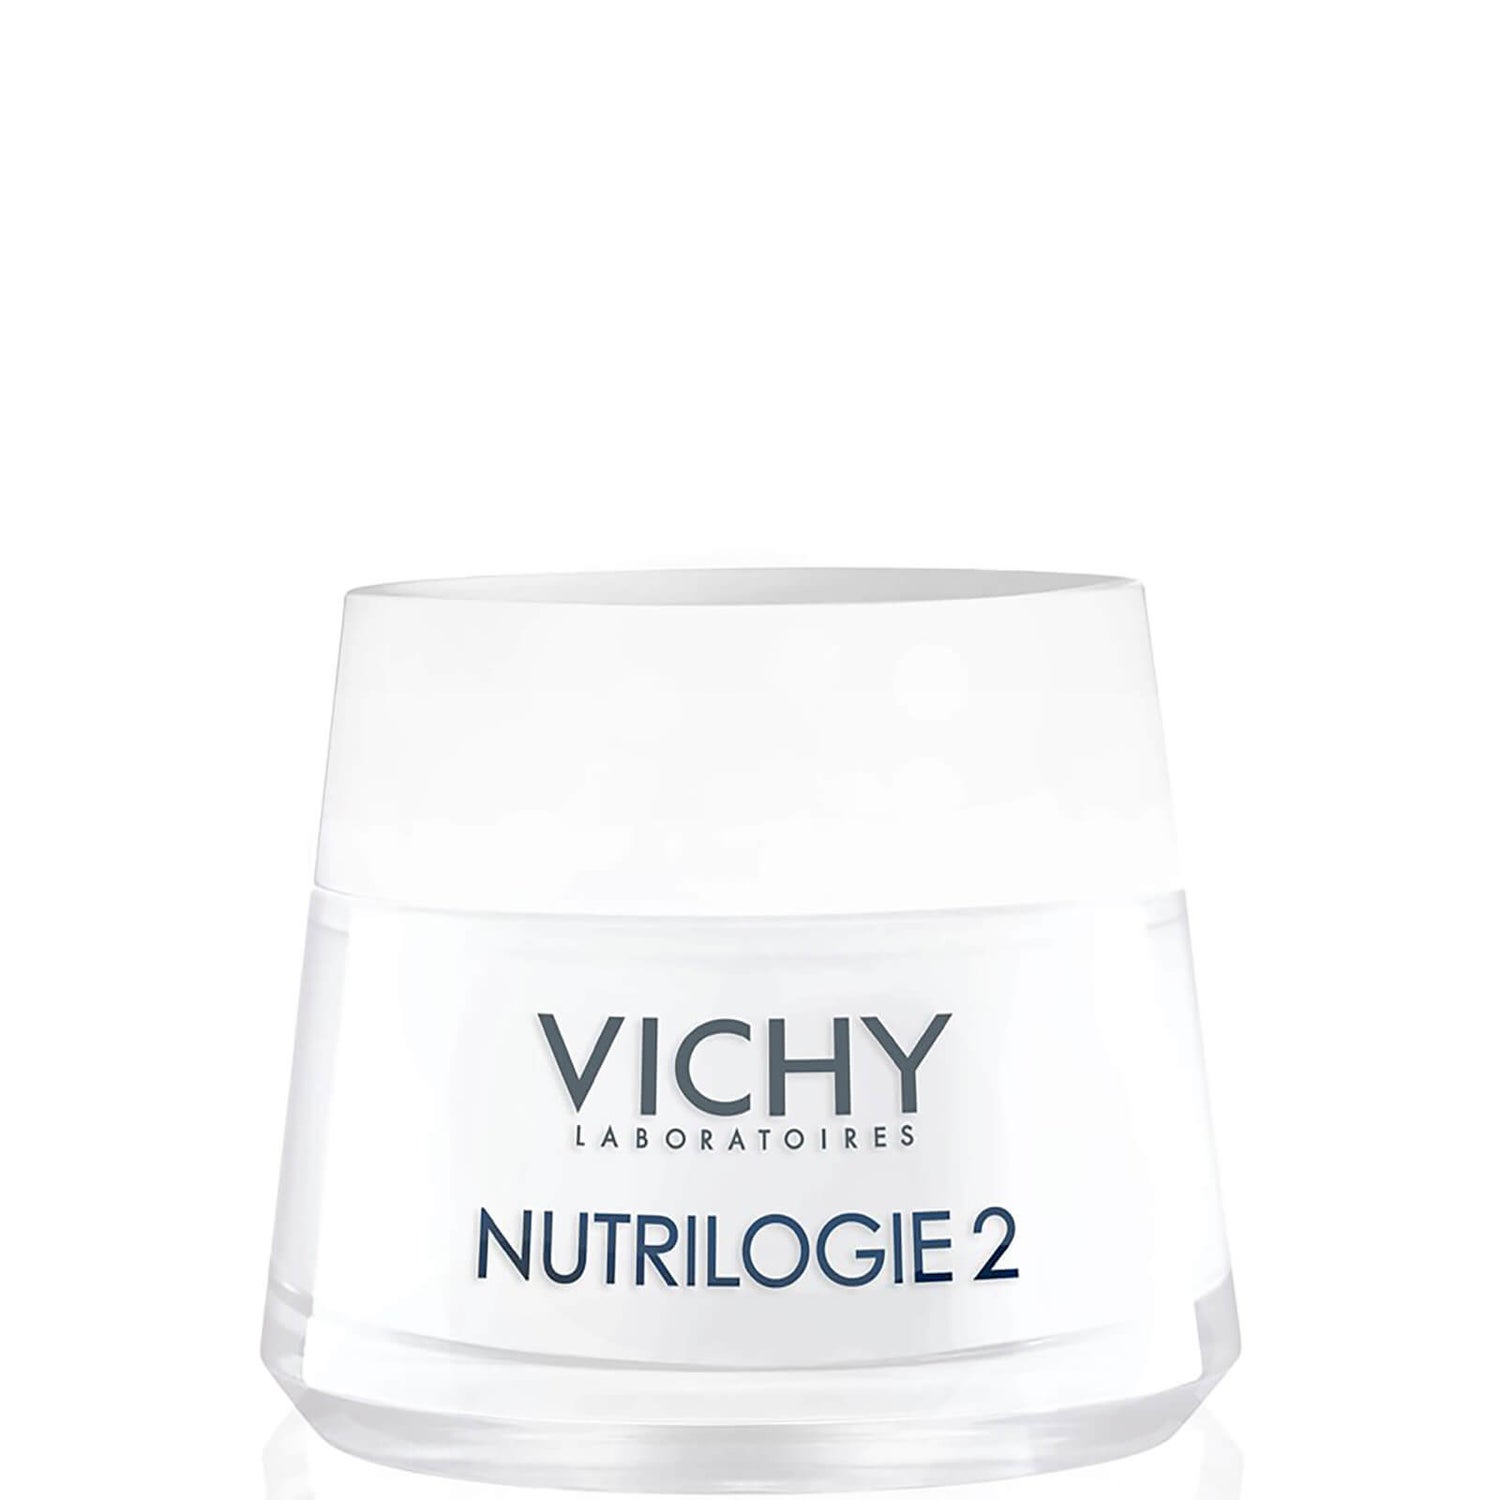 Vichy Nutrilogie 2 Intense Cream for Very Dry Skin 50ml